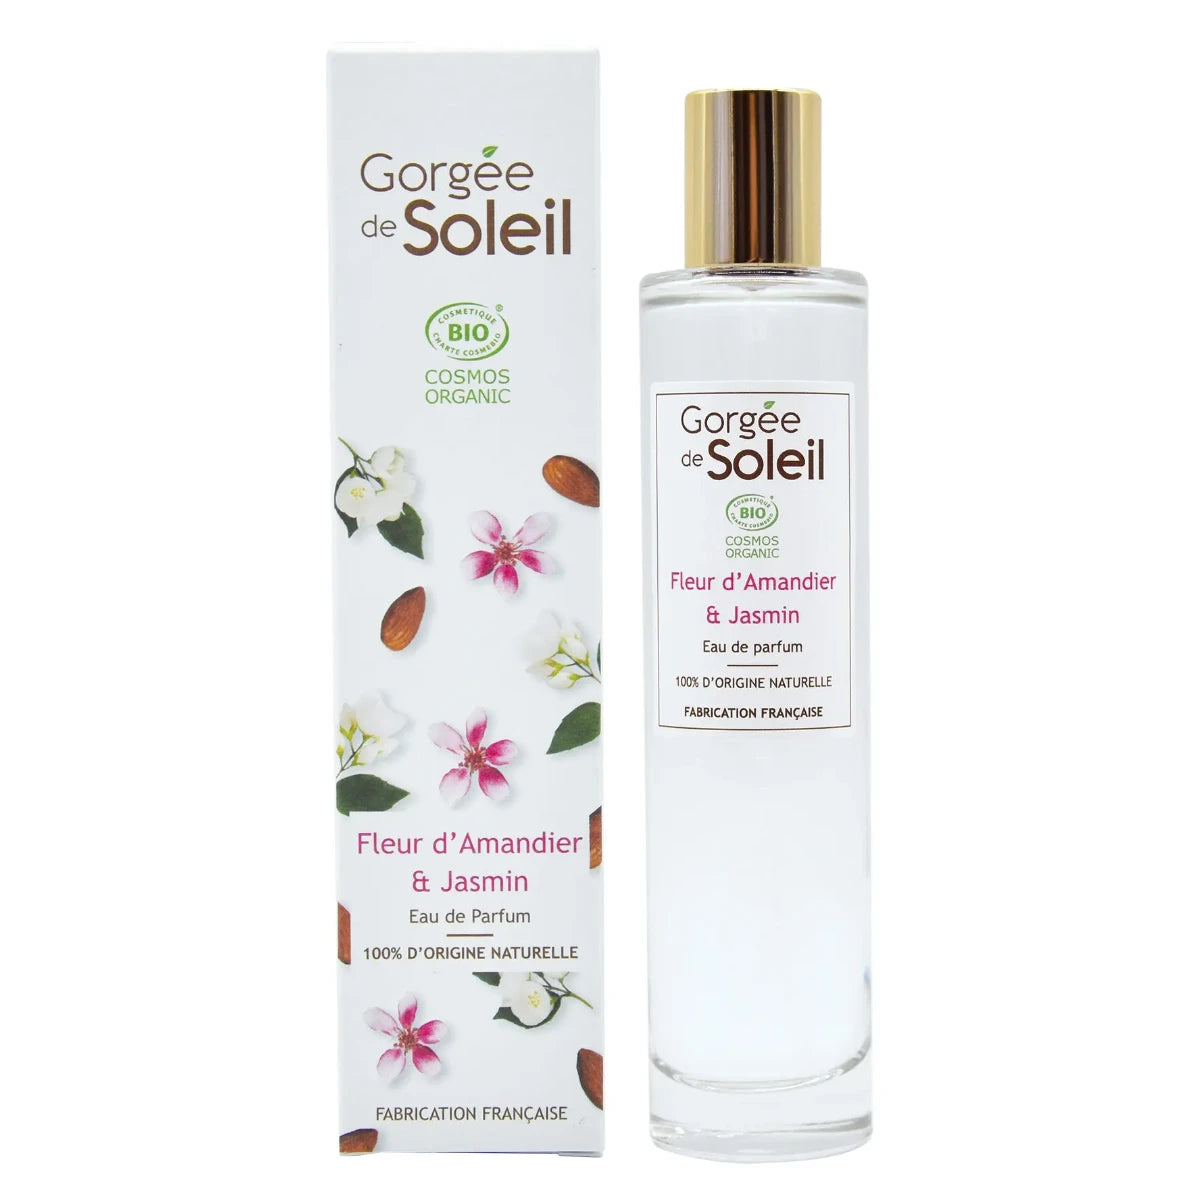 GORGEE de Soleil Bio Eau de Parfum Mantelinkukka & Jasmiini kukkaistuoksu 50 ml